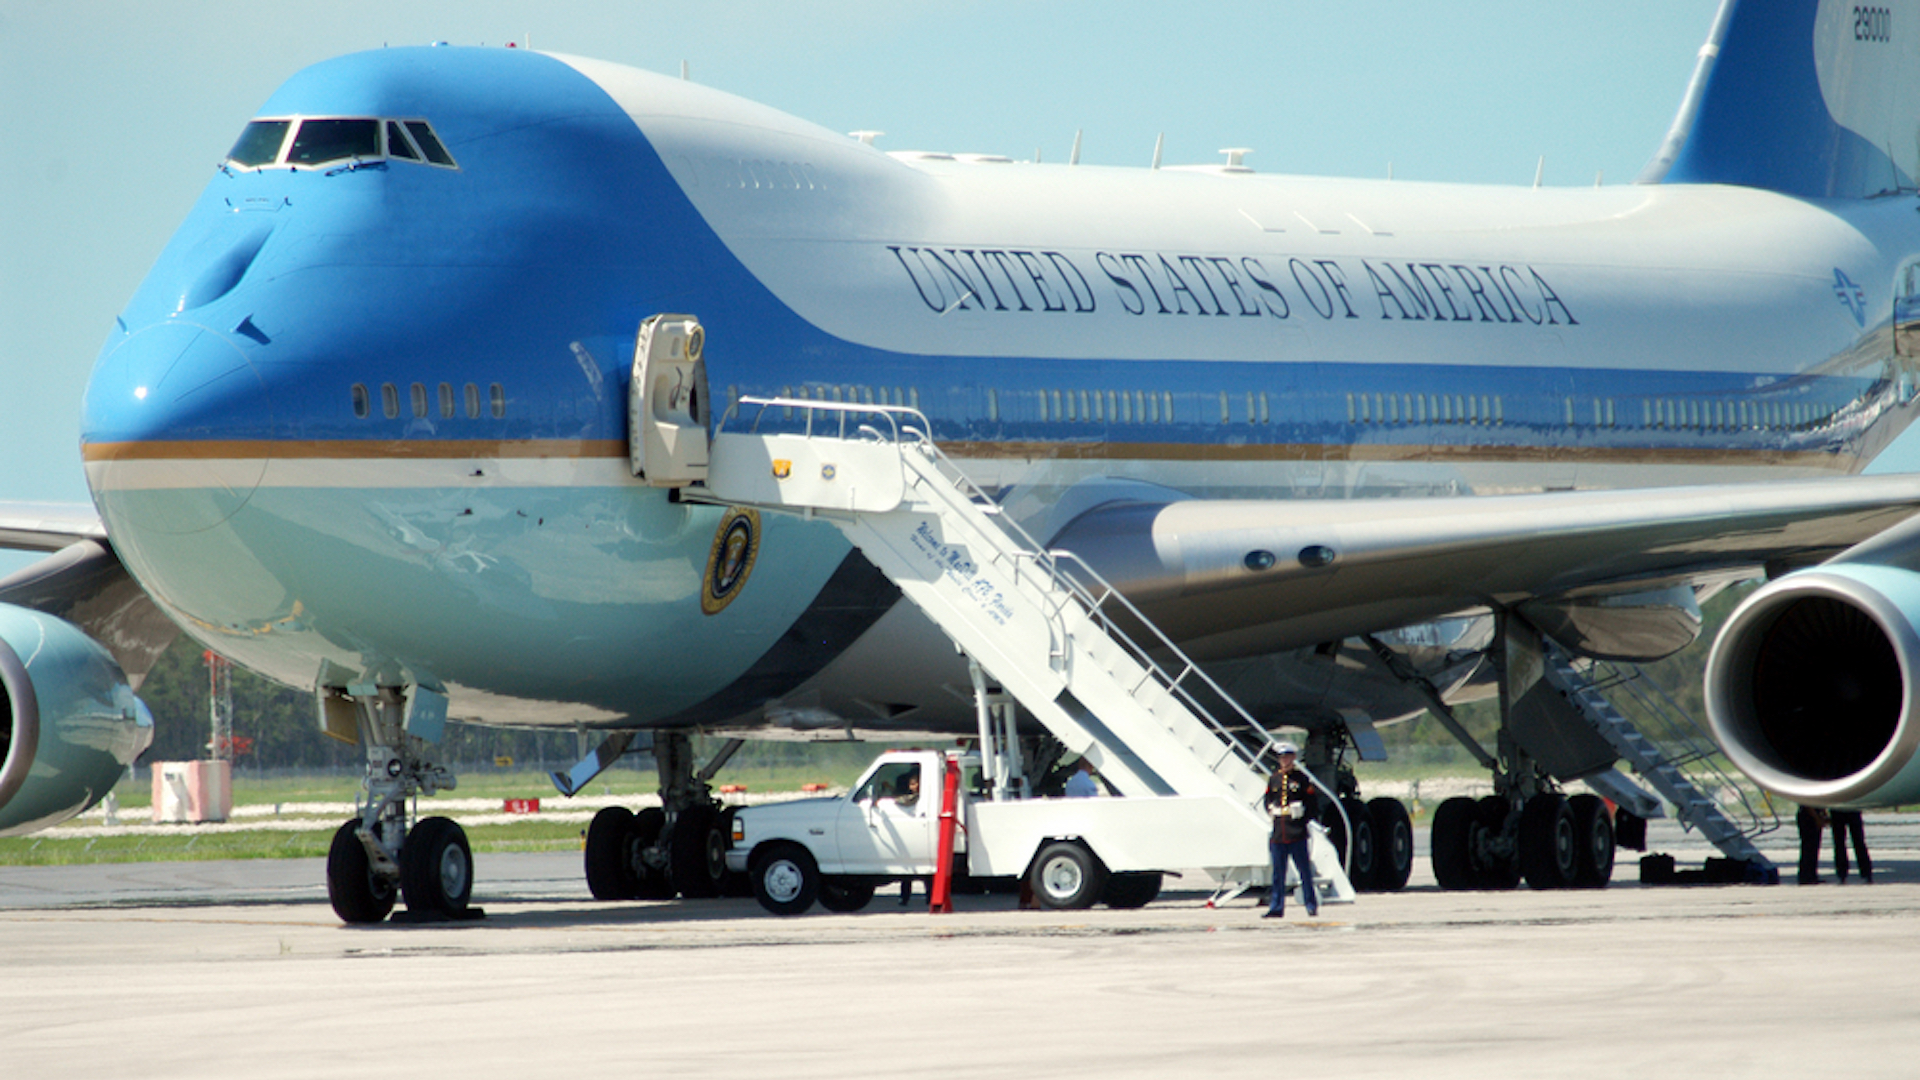 The president's plane